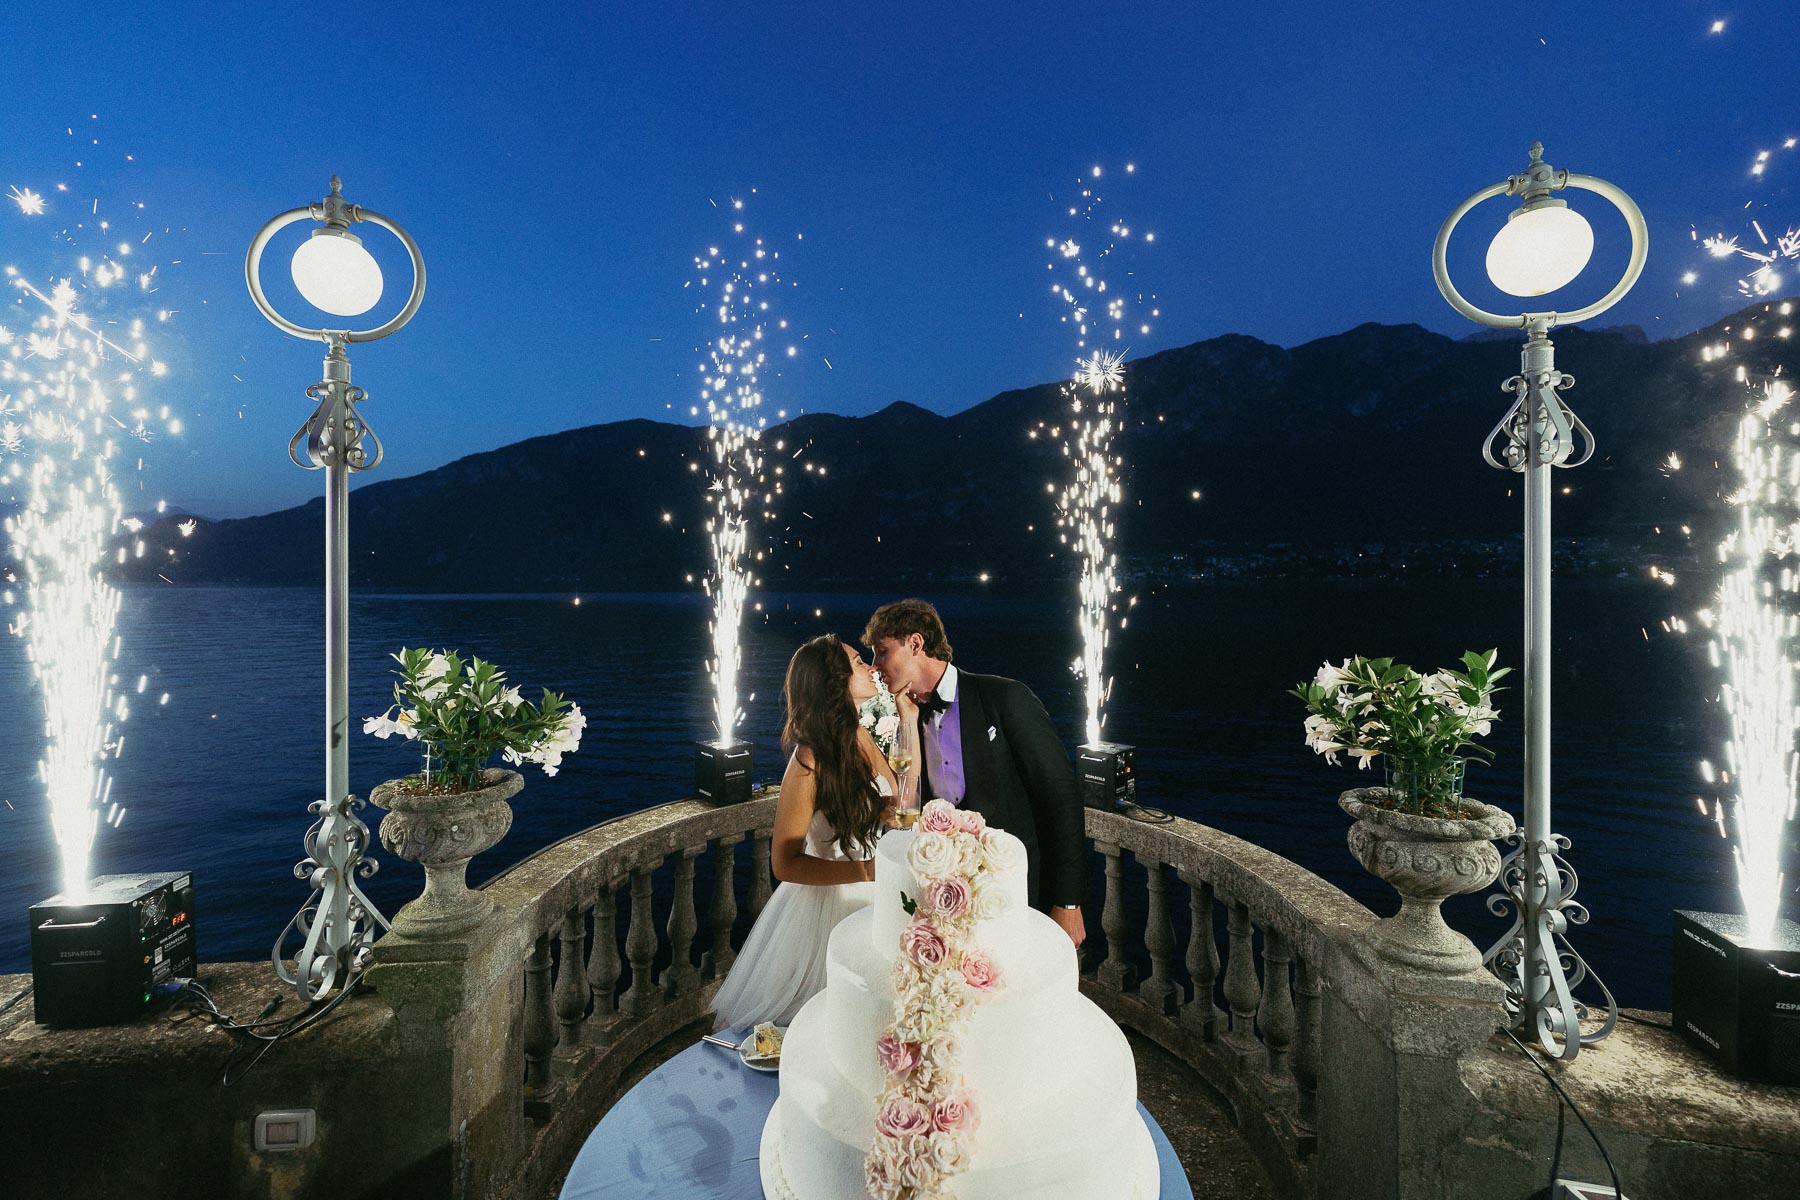 wedding locations,wedding locations italy,best wedding locations in italy,best Wedding Locations